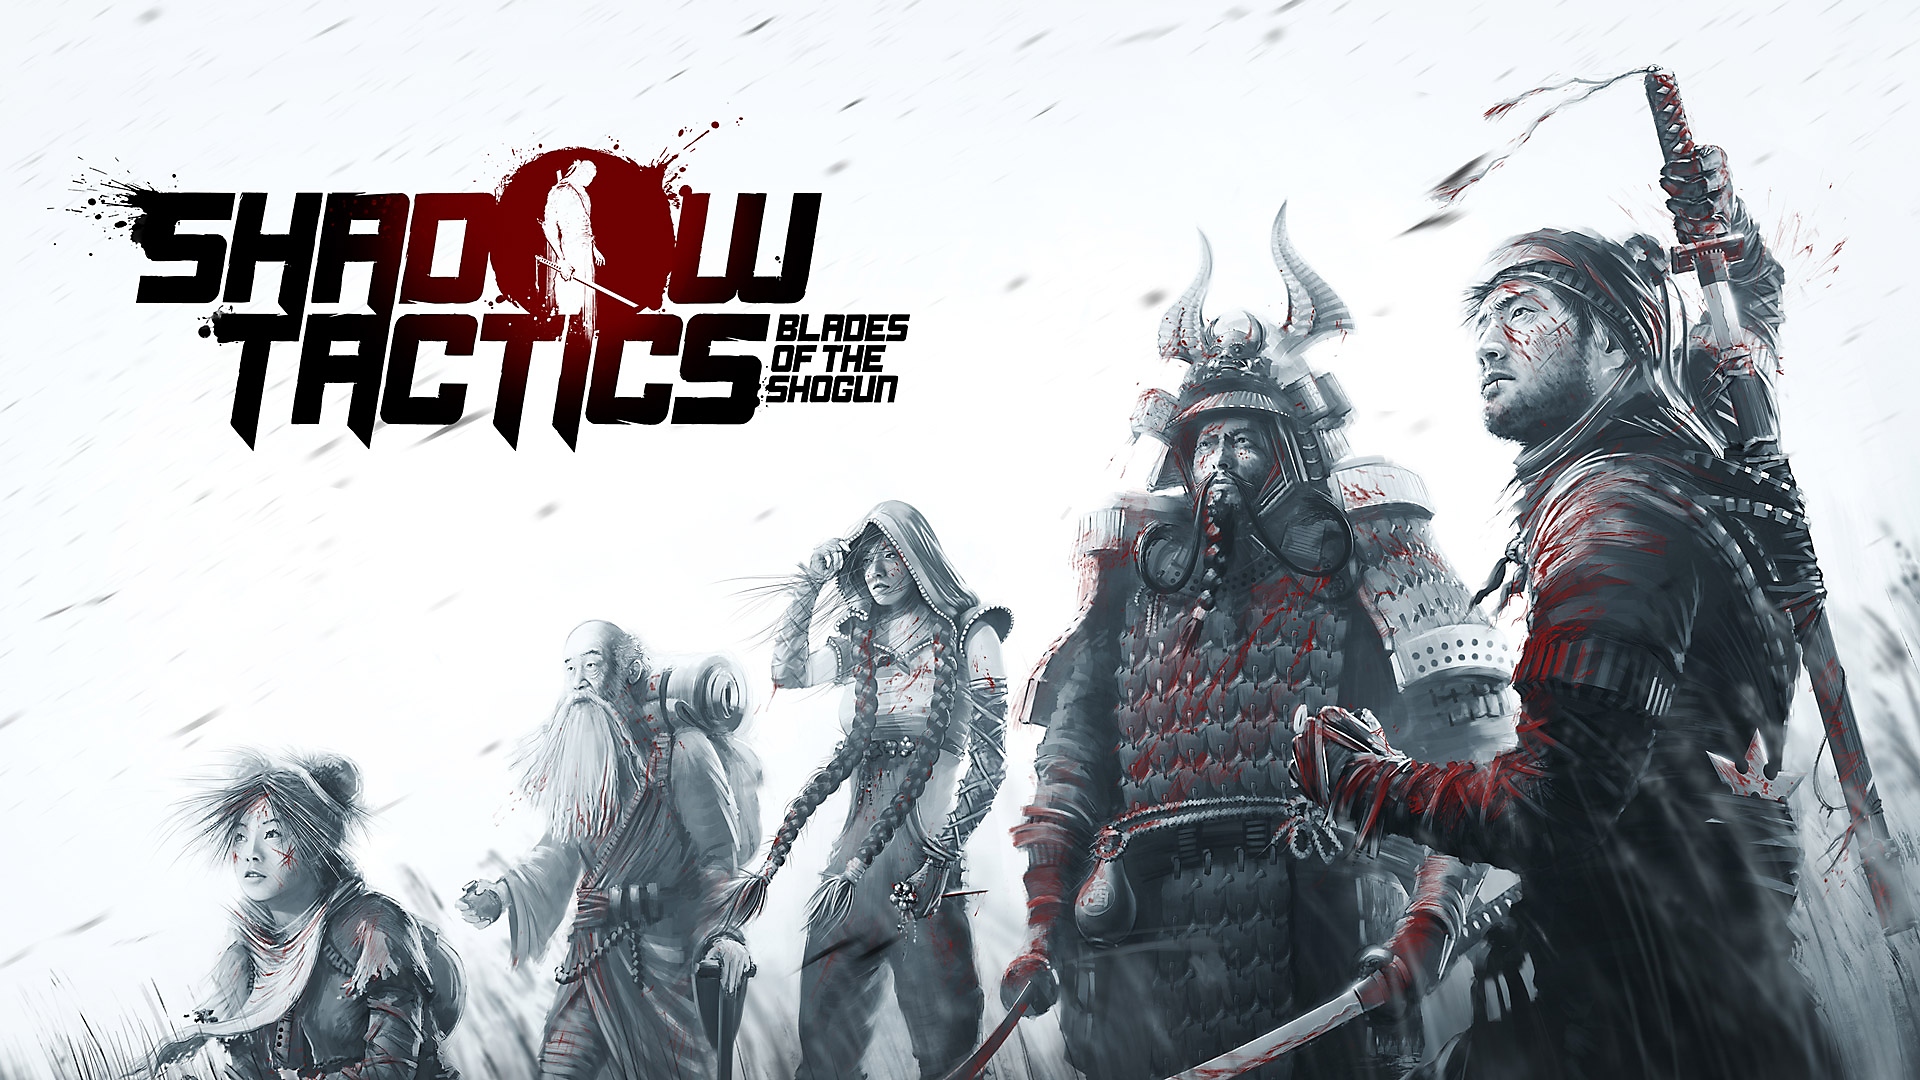 Shadow Tactics: Blades of the Shogun - العمل الفني للعبة يُظهر الشخصيات الخمسة الرئيسية في رسم بالقلم الرصاص بالأبيض والأسود.